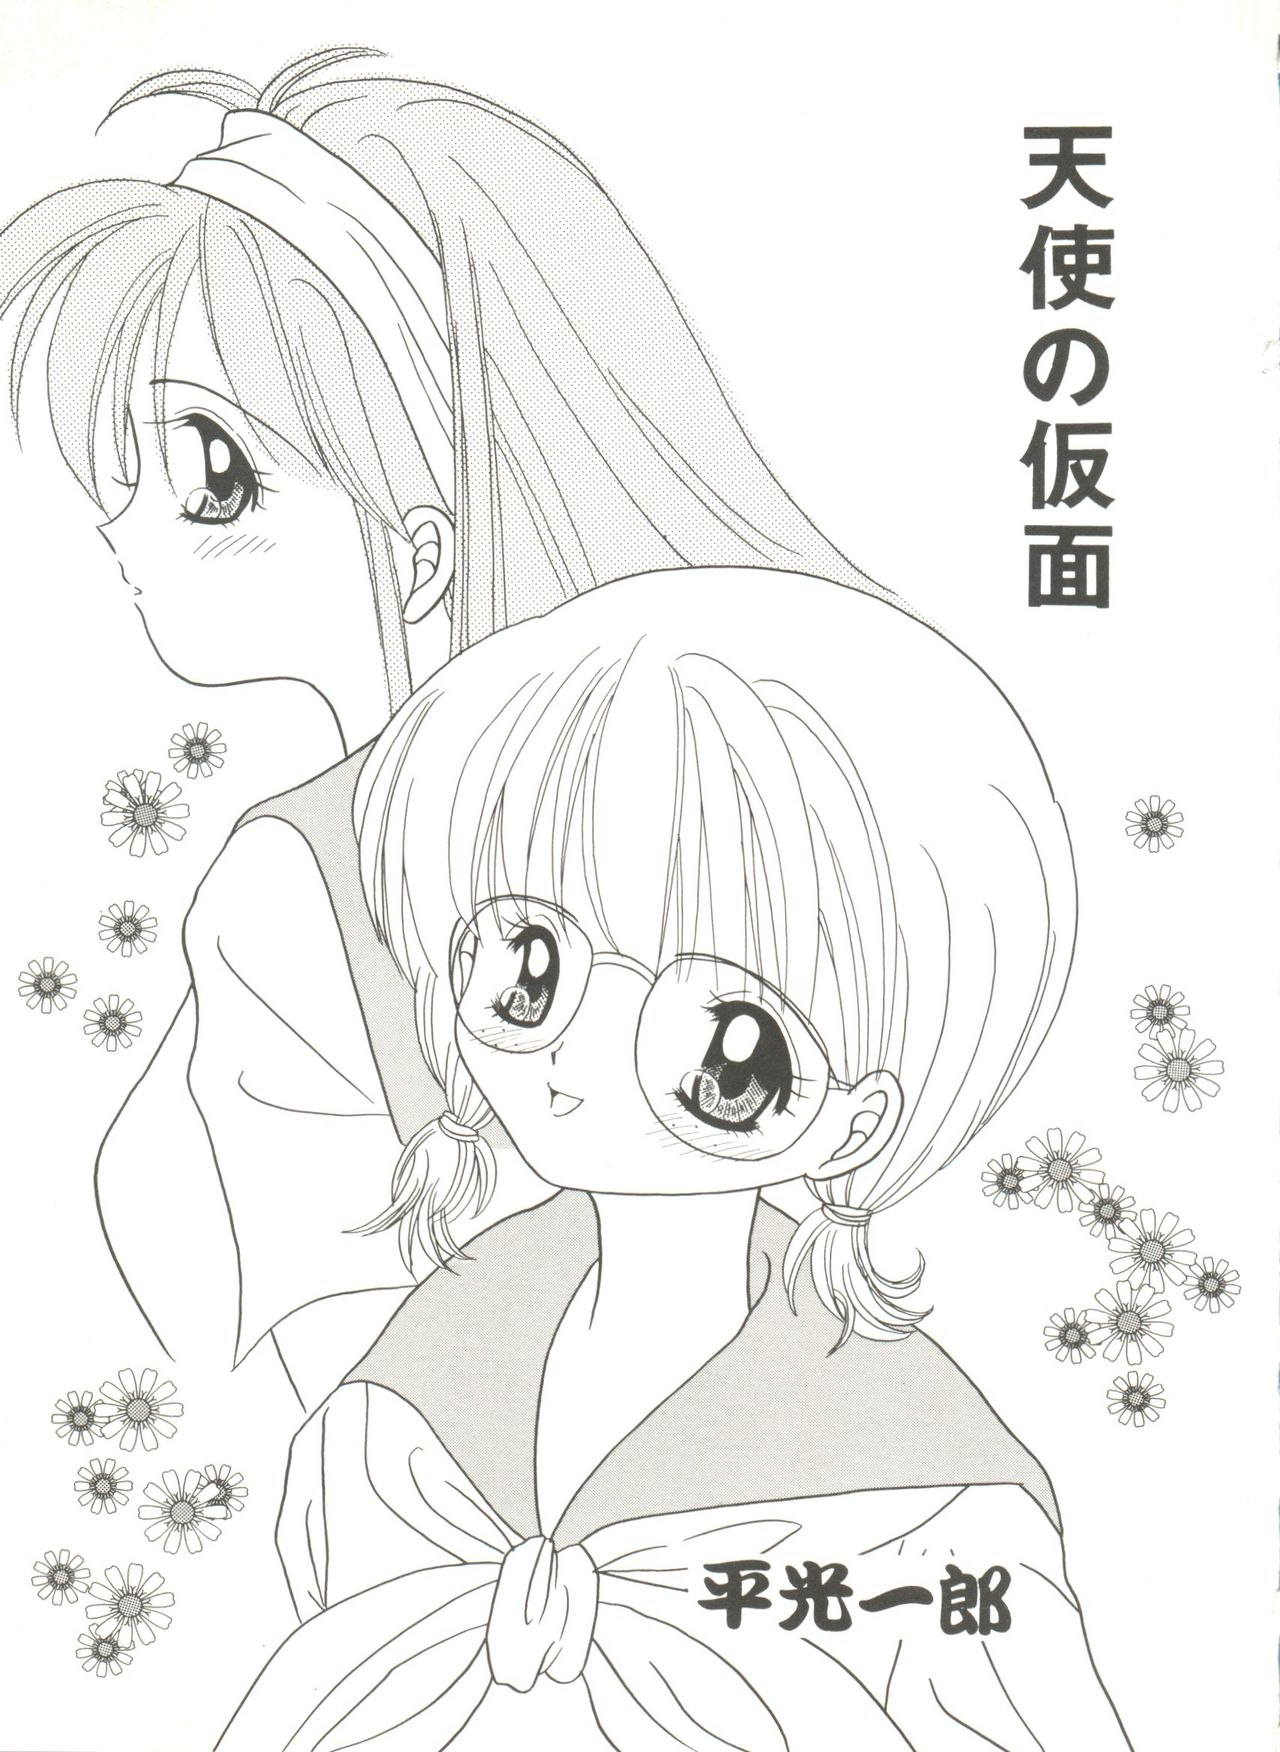 [Anthology] Doujin Anthology Bishoujo Gumi 8 (Various) [アンソロジー] 同人アンソロジー美少女組8 (よろず)